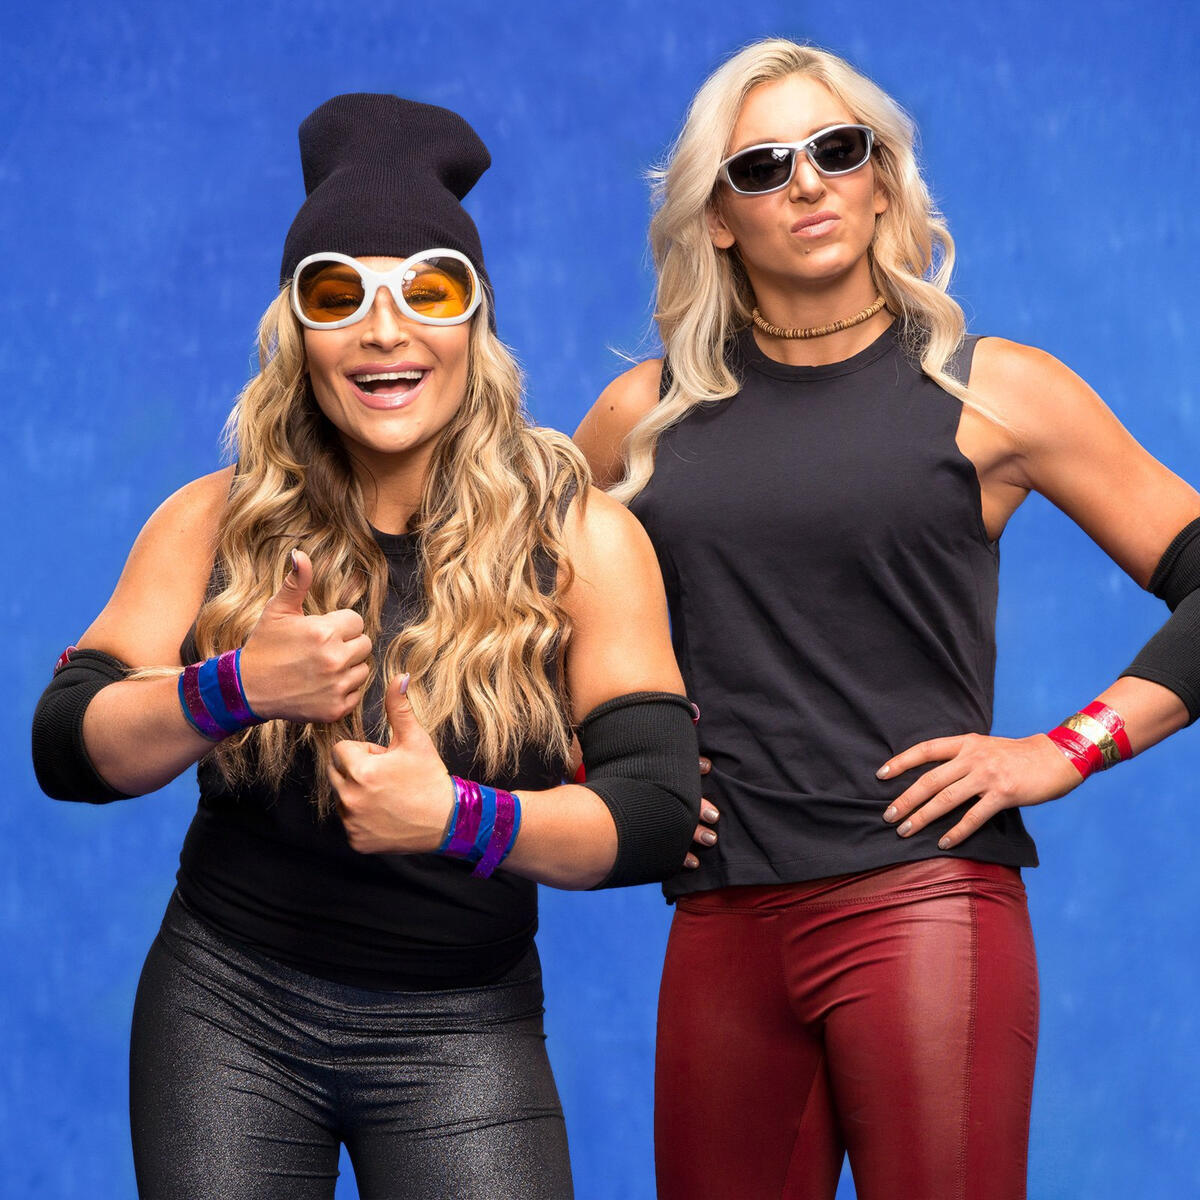 Charlotte & Natalya as Edge & Christian